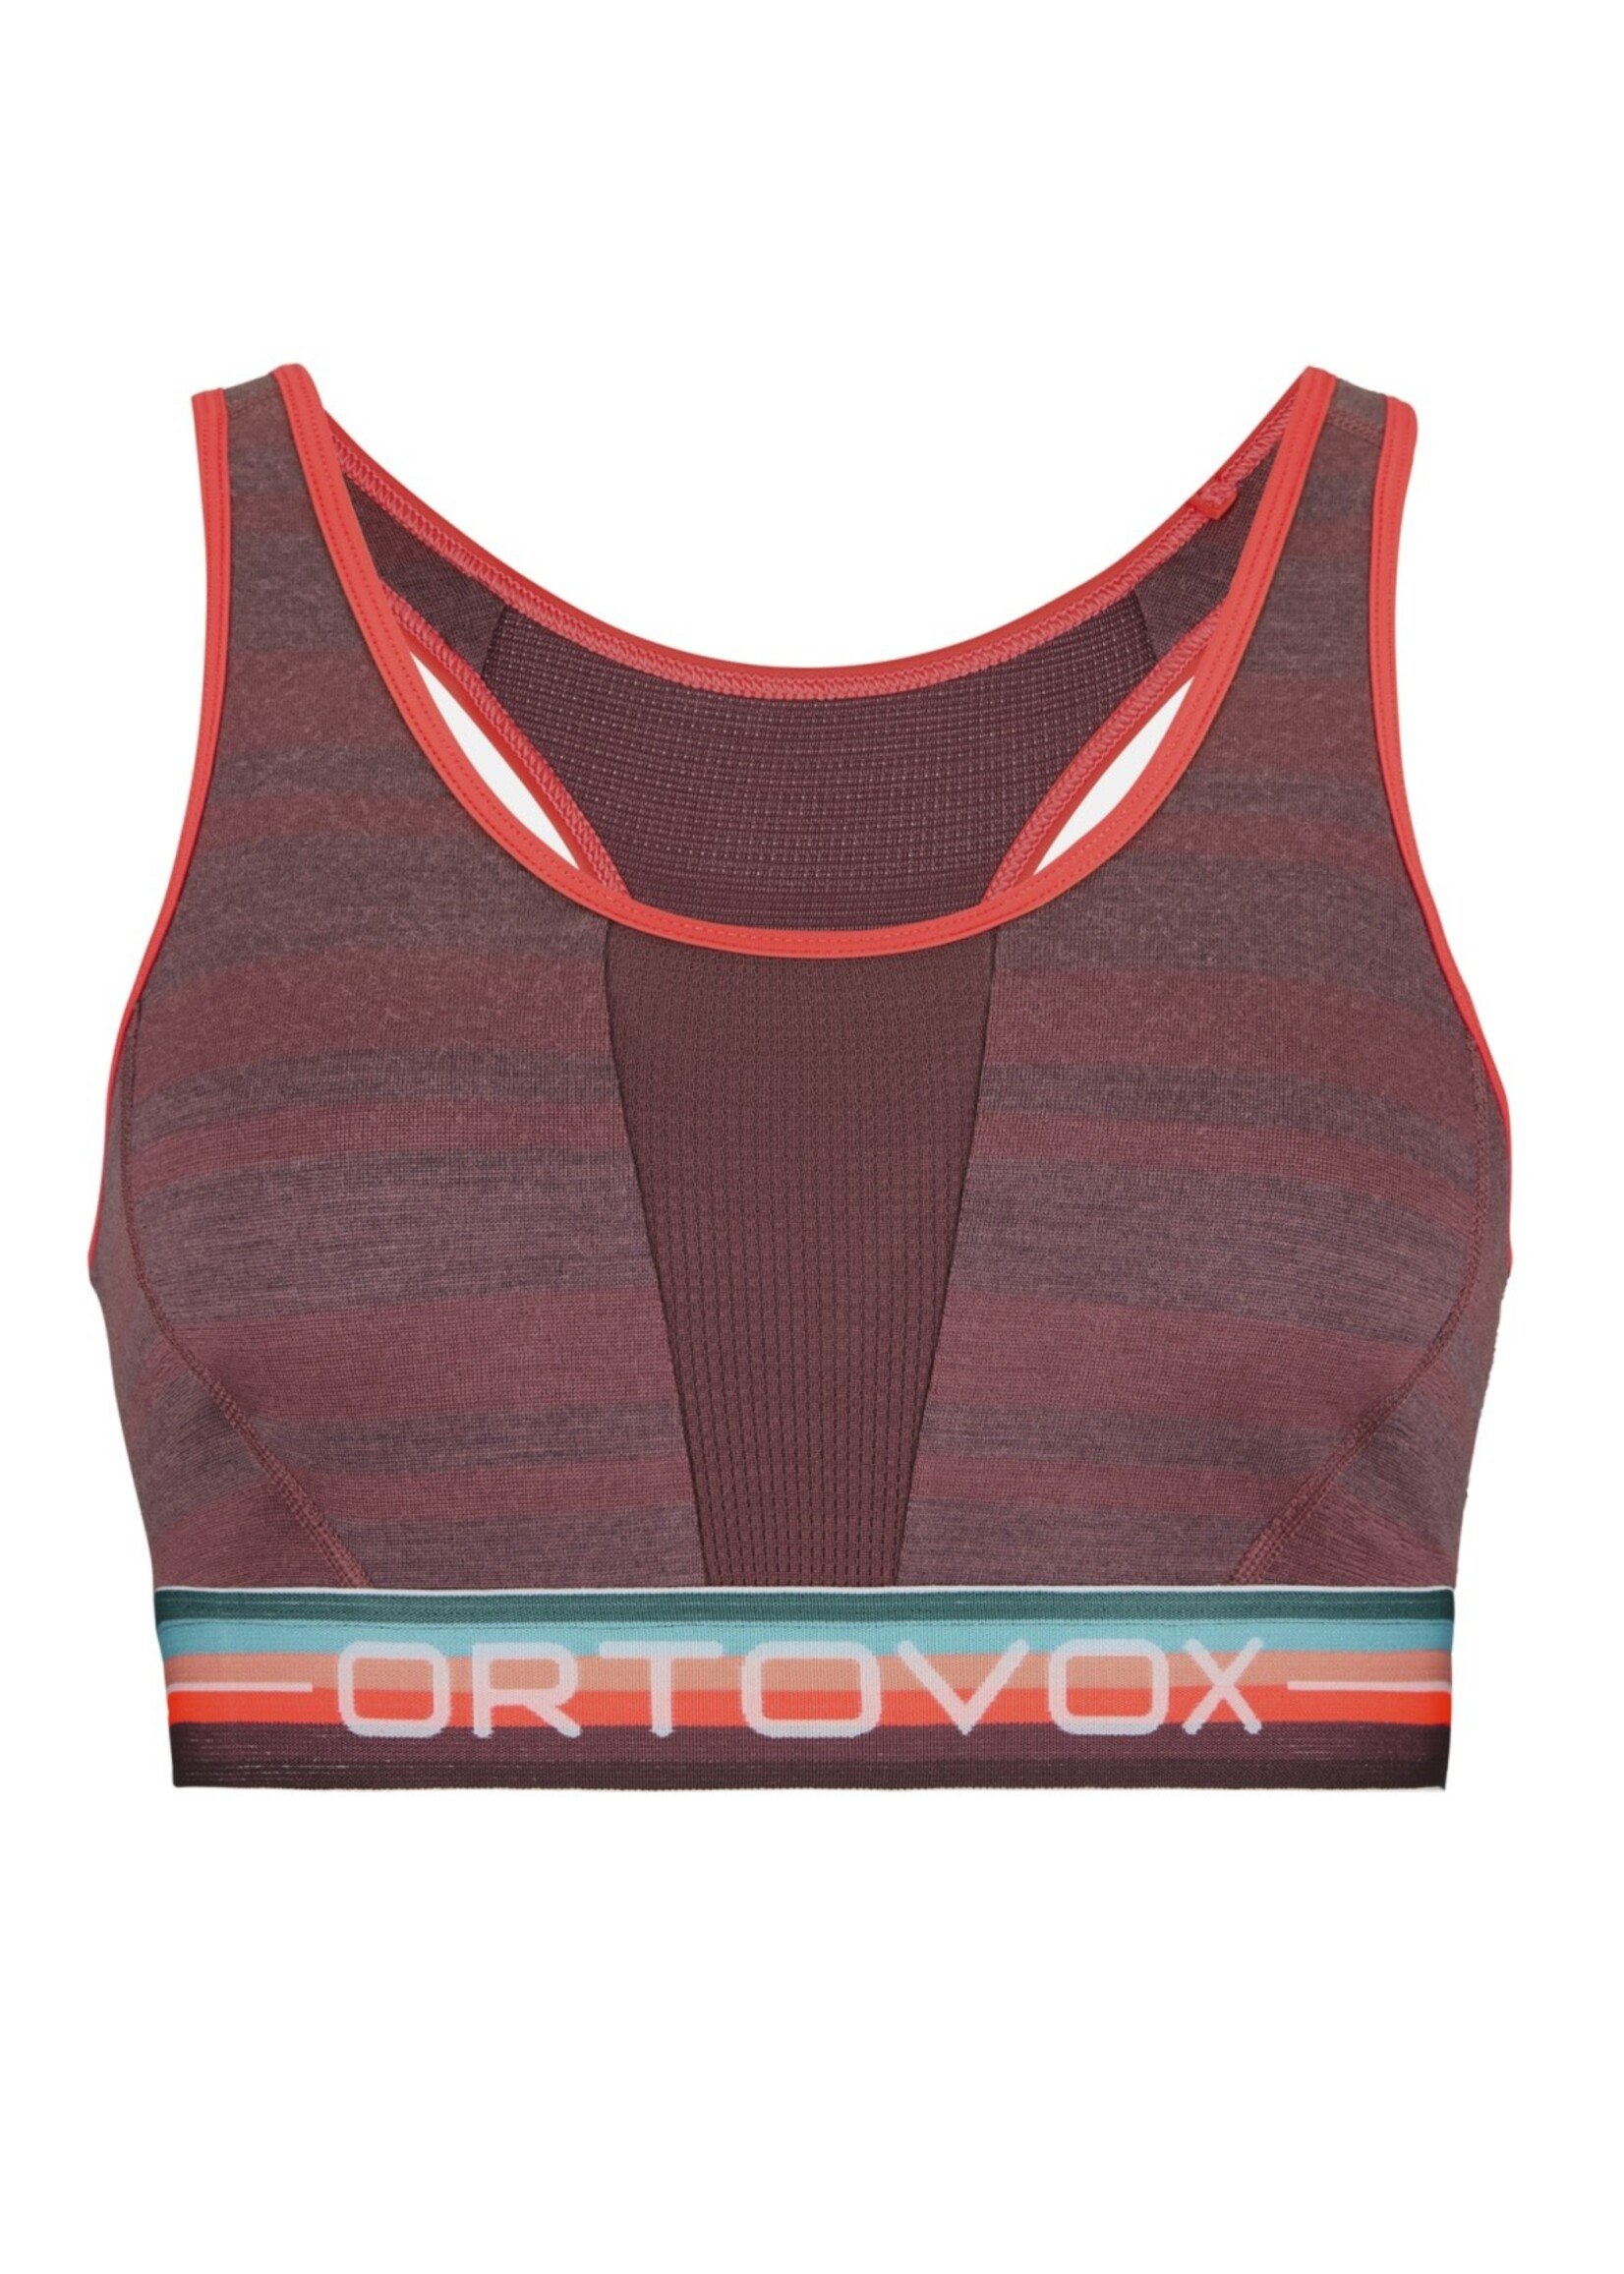 Ortovox 185 Rock'n'wool Sport Top  Vertical Addiction - Vertical